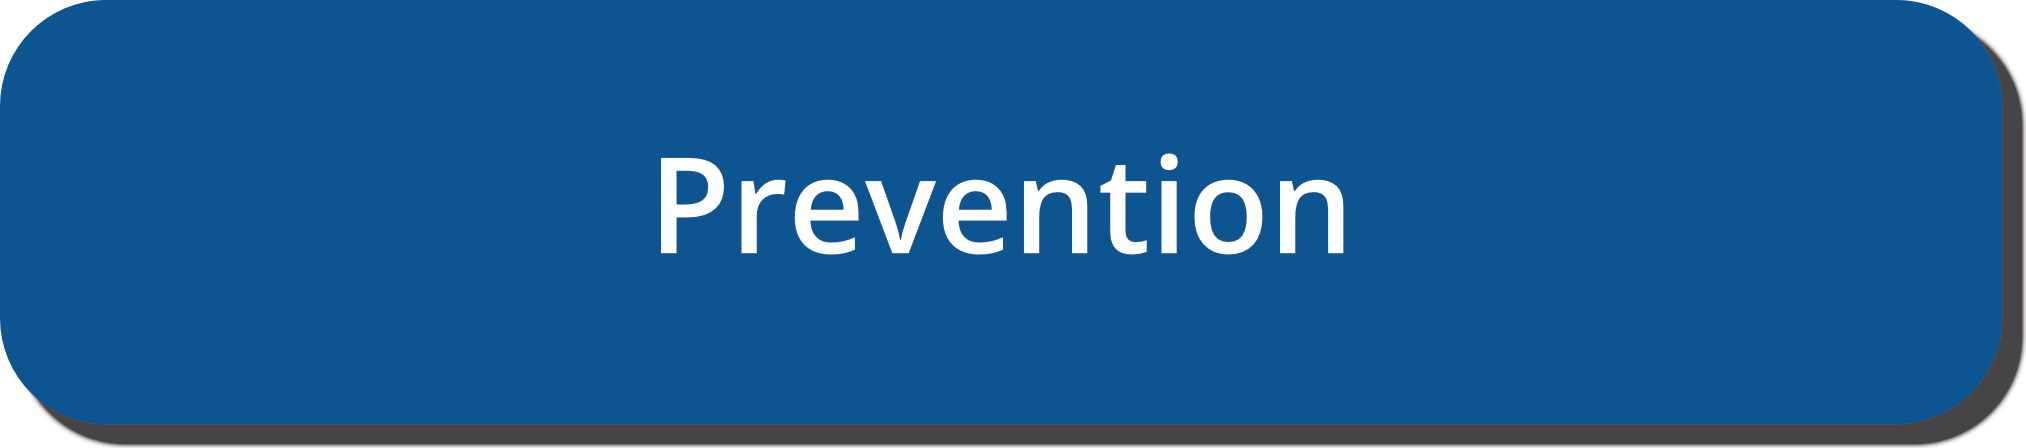 Prevention Button Link